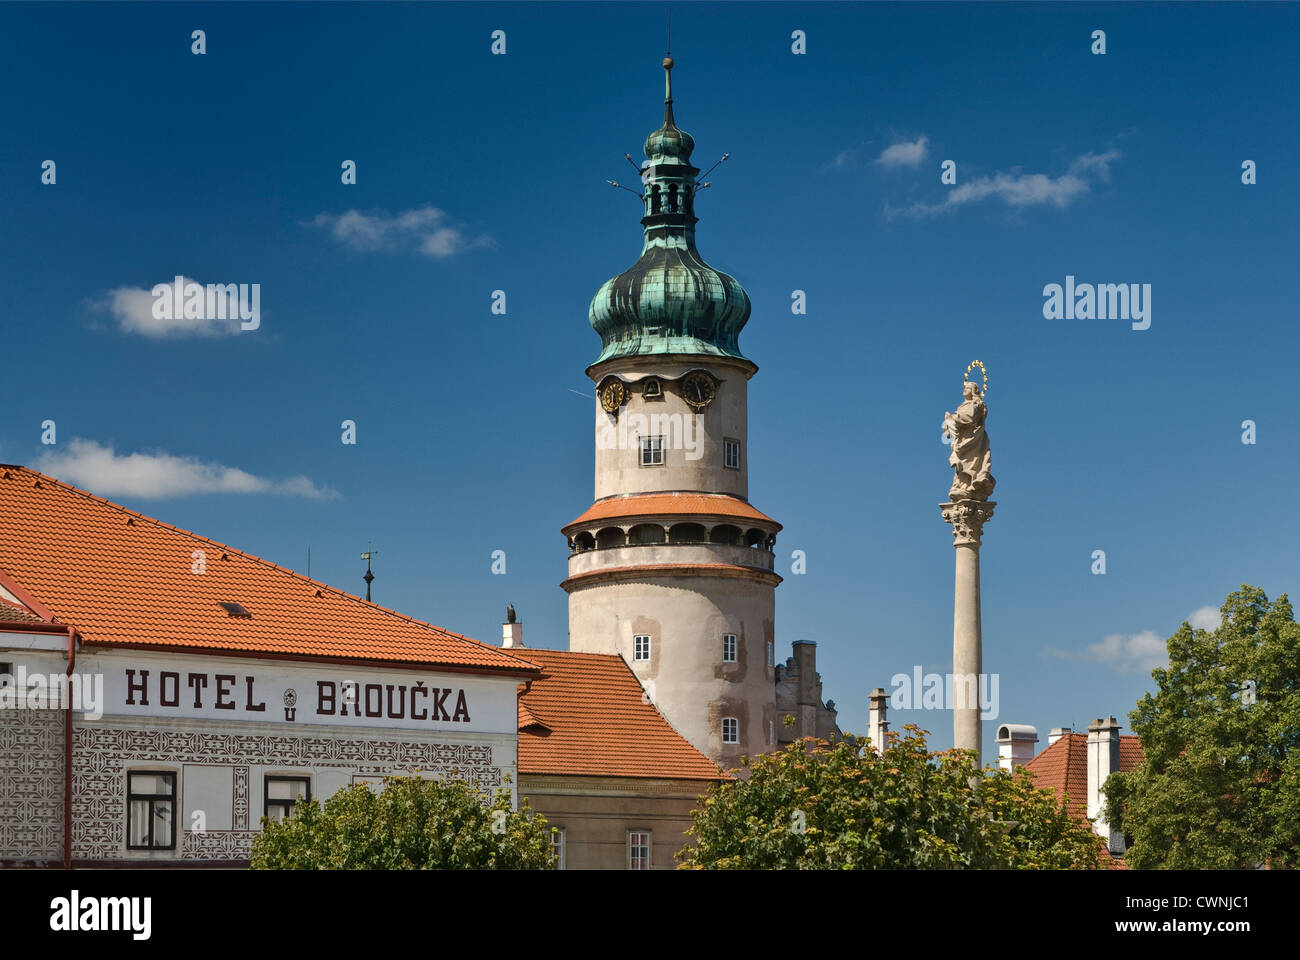 Burg, Turm und Spalte im Nové Město nad Metují im ostböhmischen Kraj (Region Hradec Králové), Tschechische Republik Stockfoto